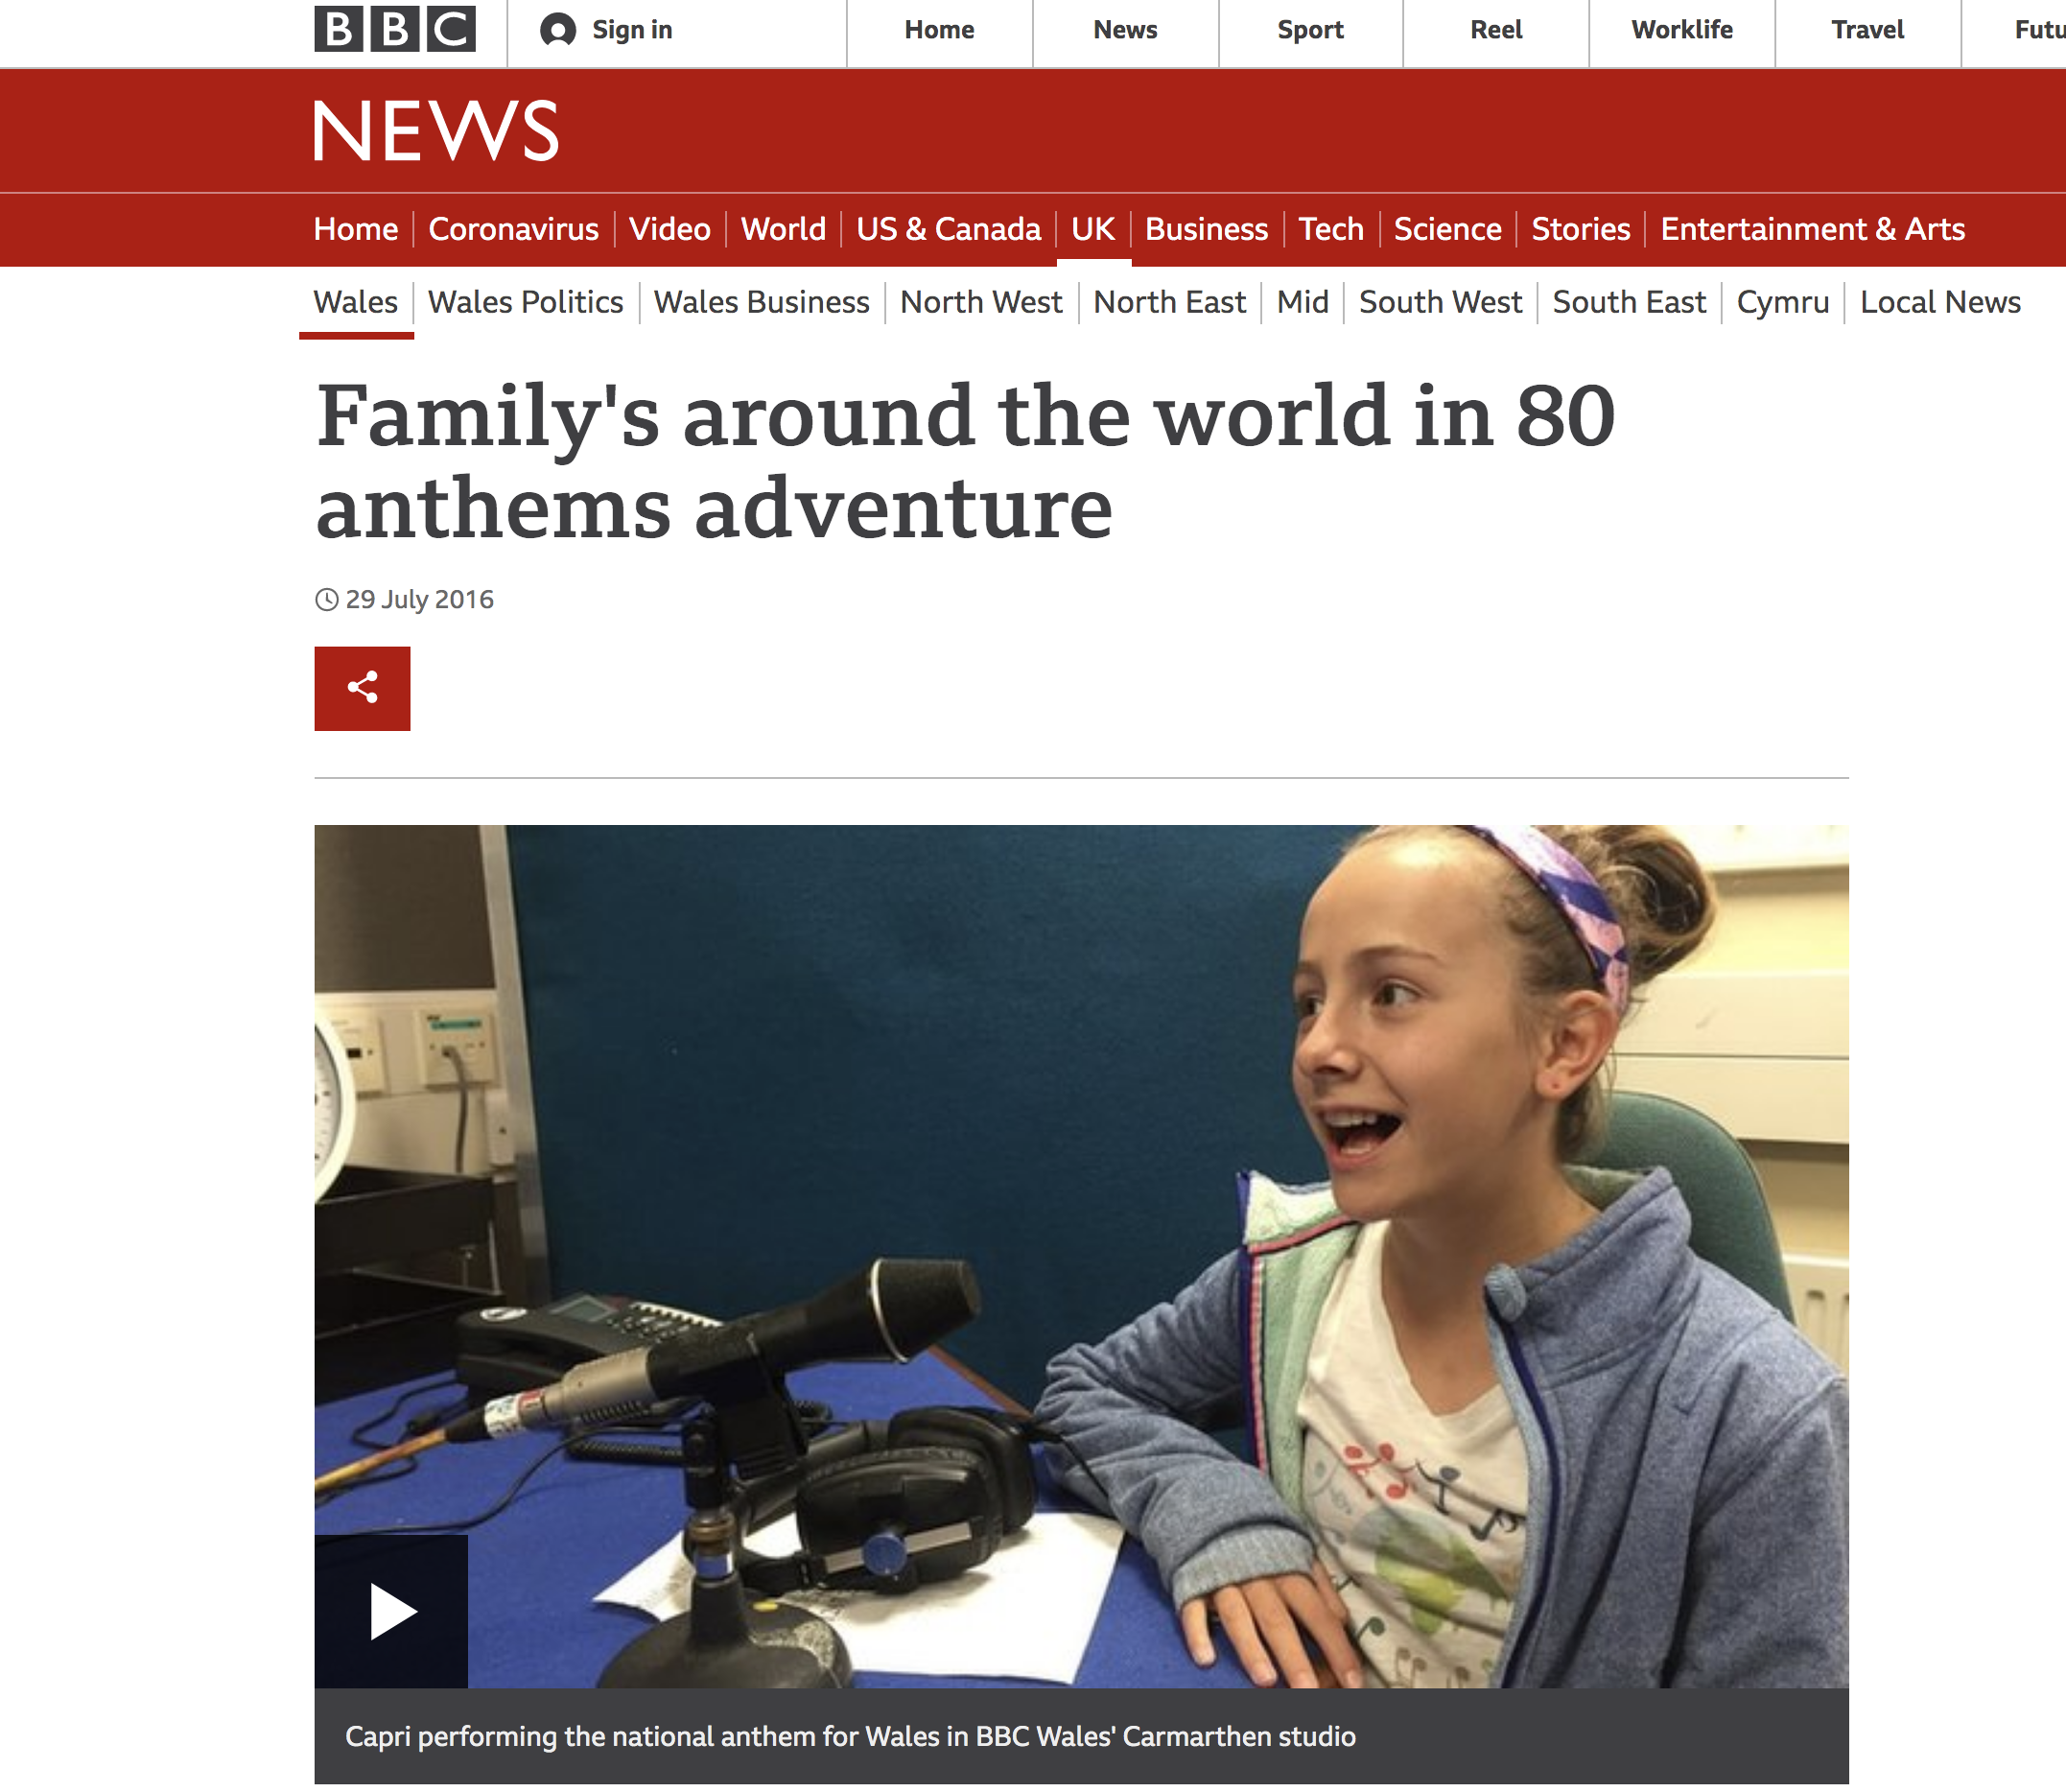 Wales: BBC News